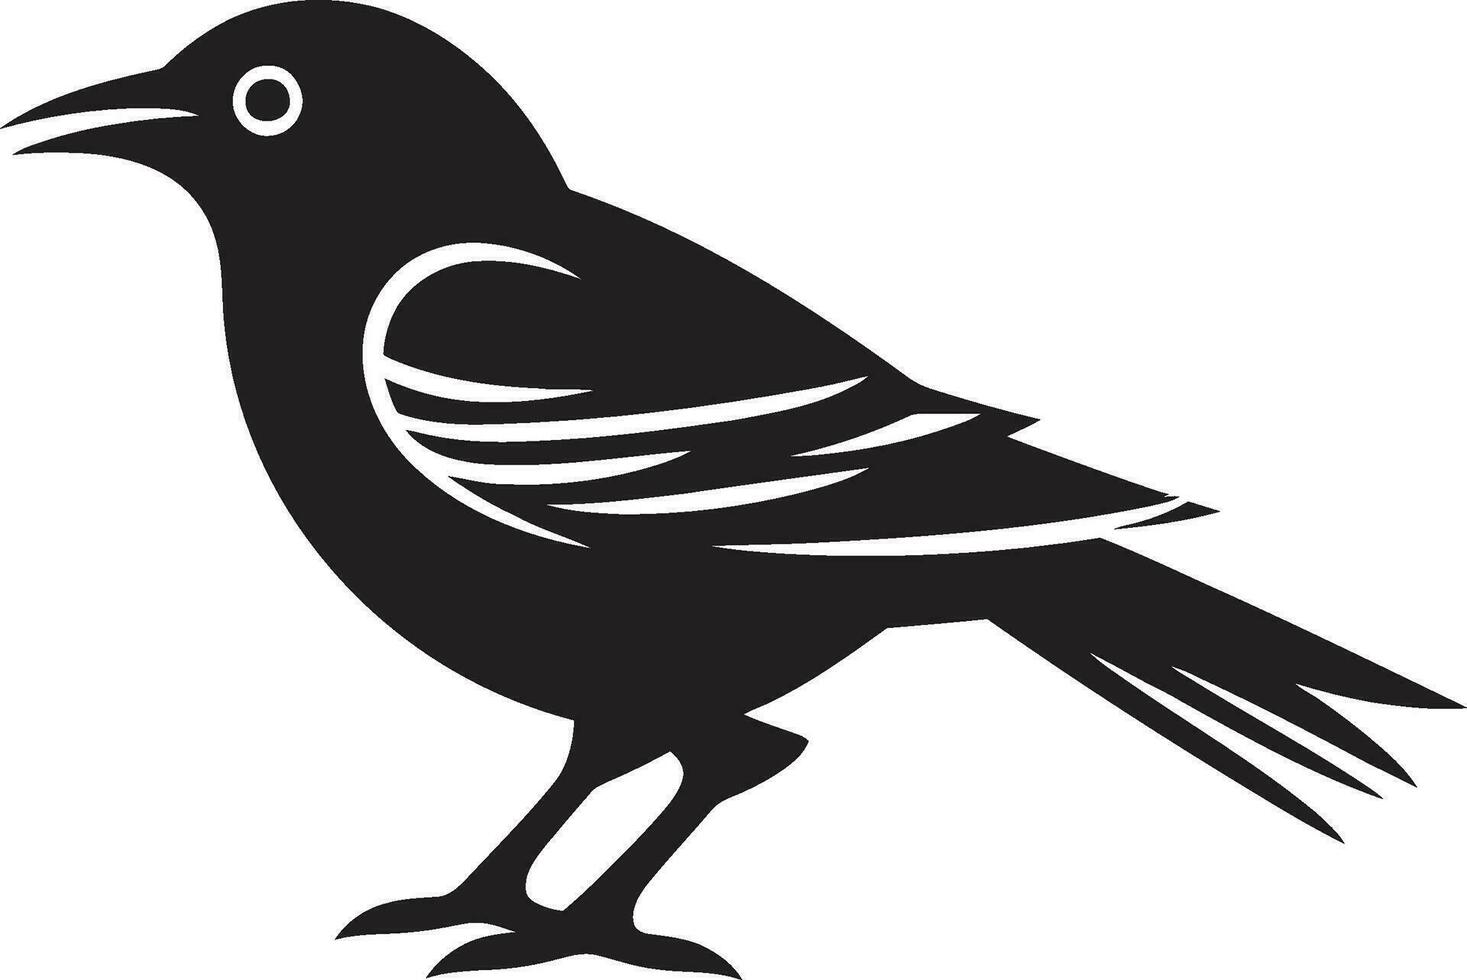 Soaring Hawk Symbol Stylized Owl Crest vector